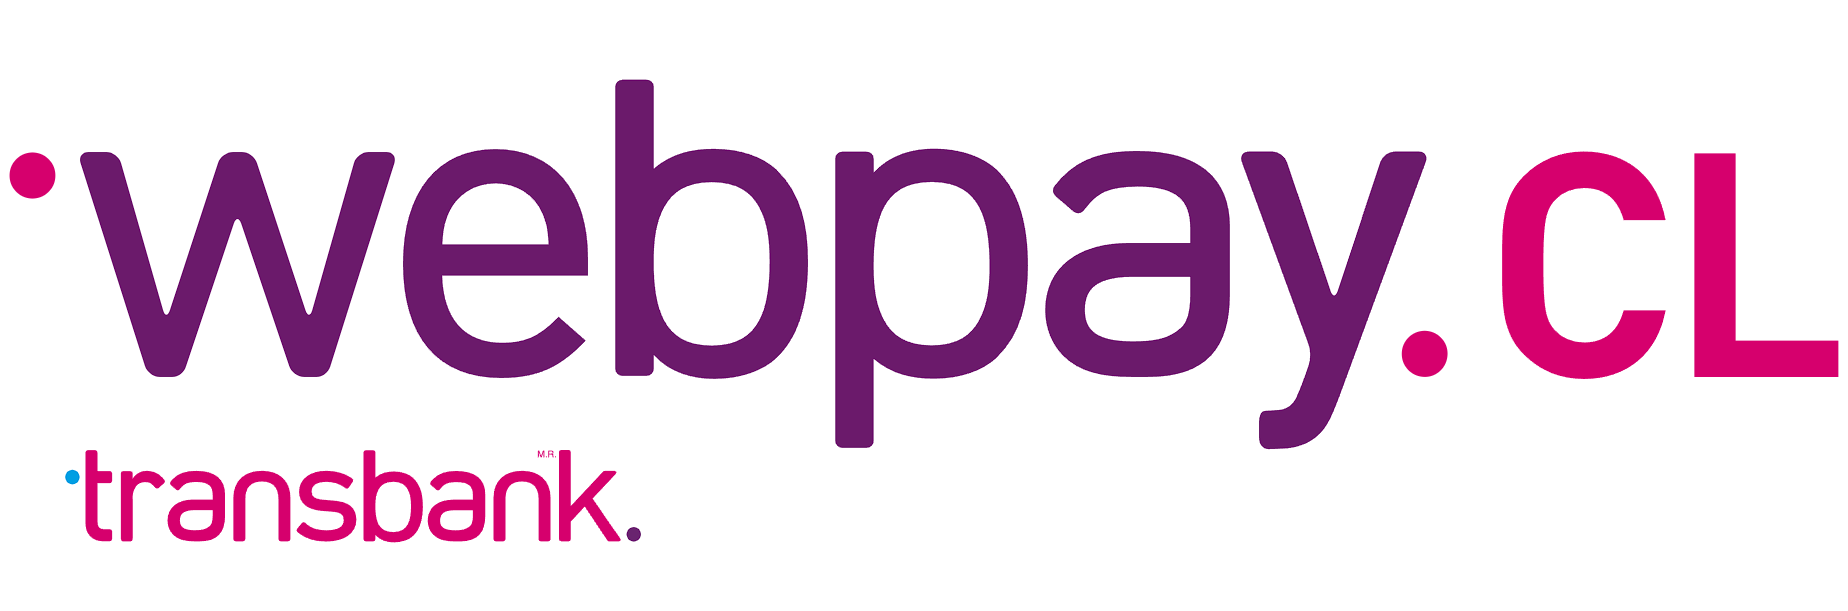 logo webpay